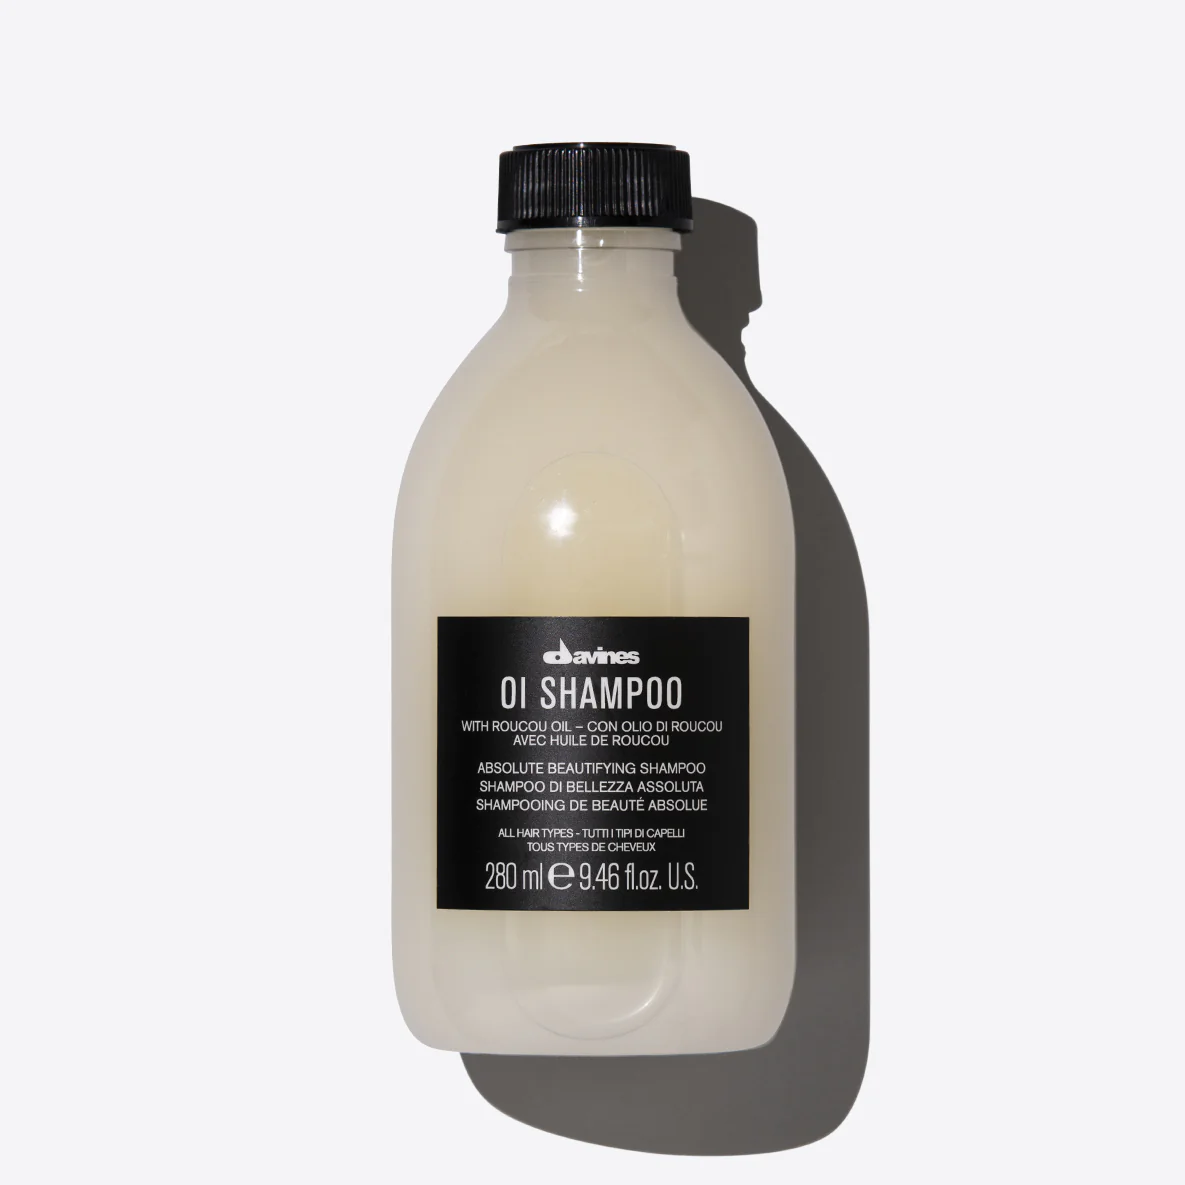 Davines OI Shampoo - Шампунь для абсолютной красоты волос, 280мл